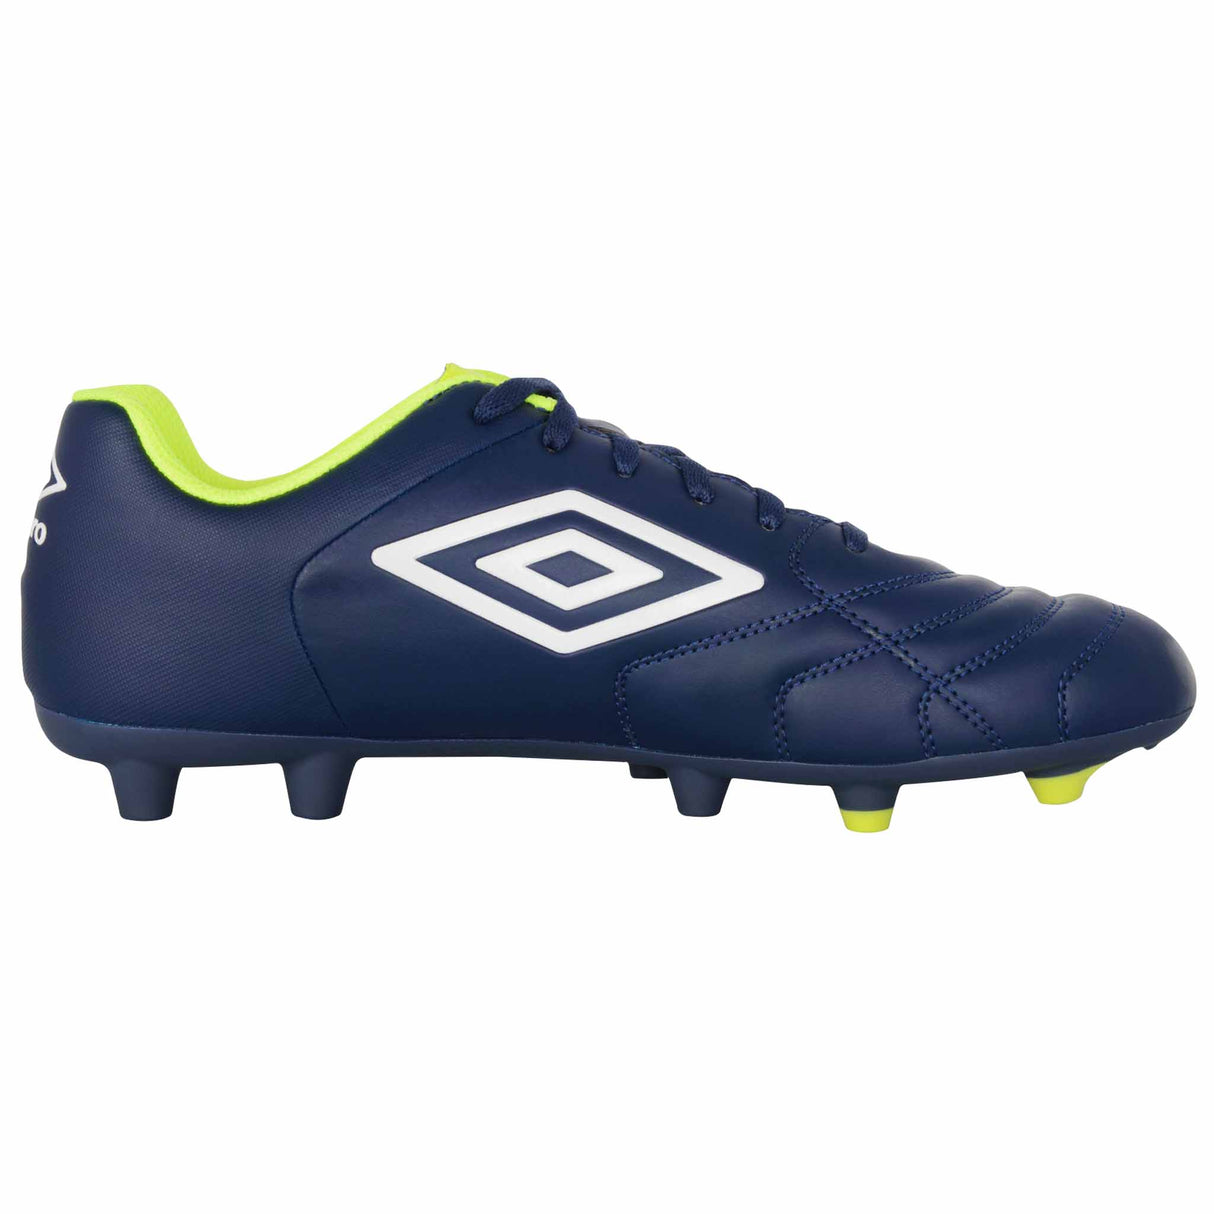 Umbro Classico XI FG Junior chaussure de soccer pour enfant - Bleu Marine / Jaune